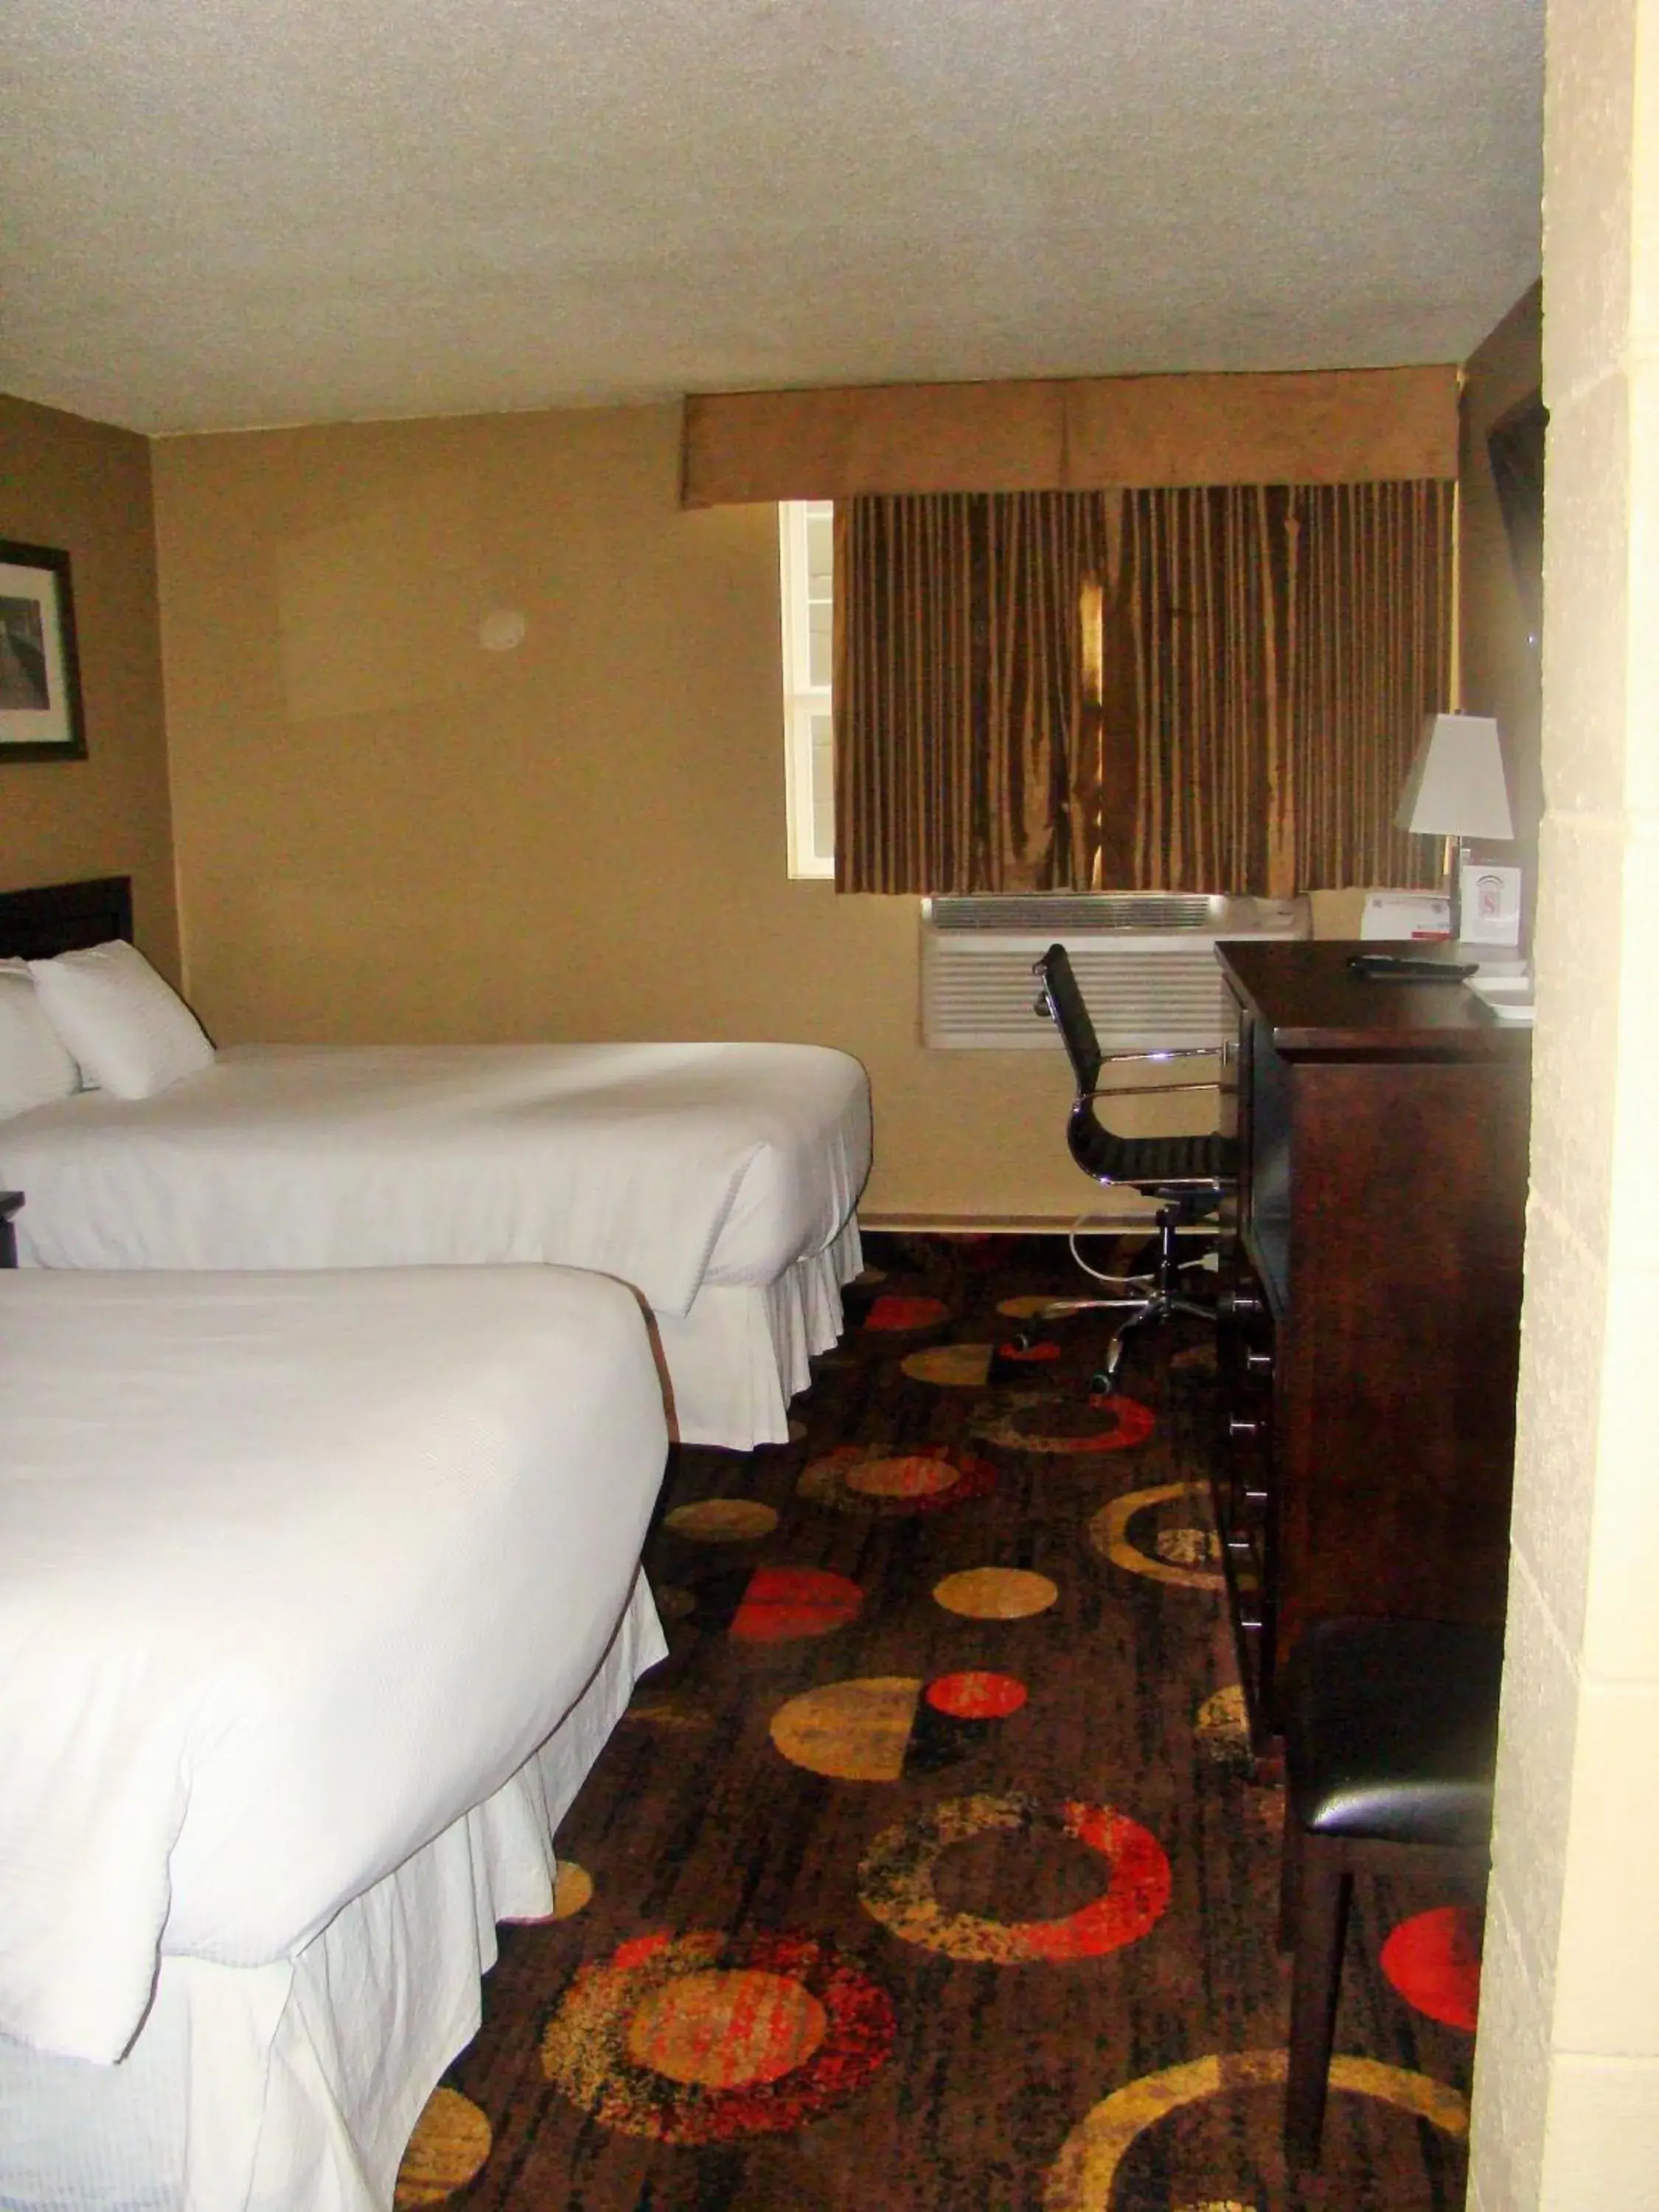 Bed, Room Photo in Stonebridge Hotel